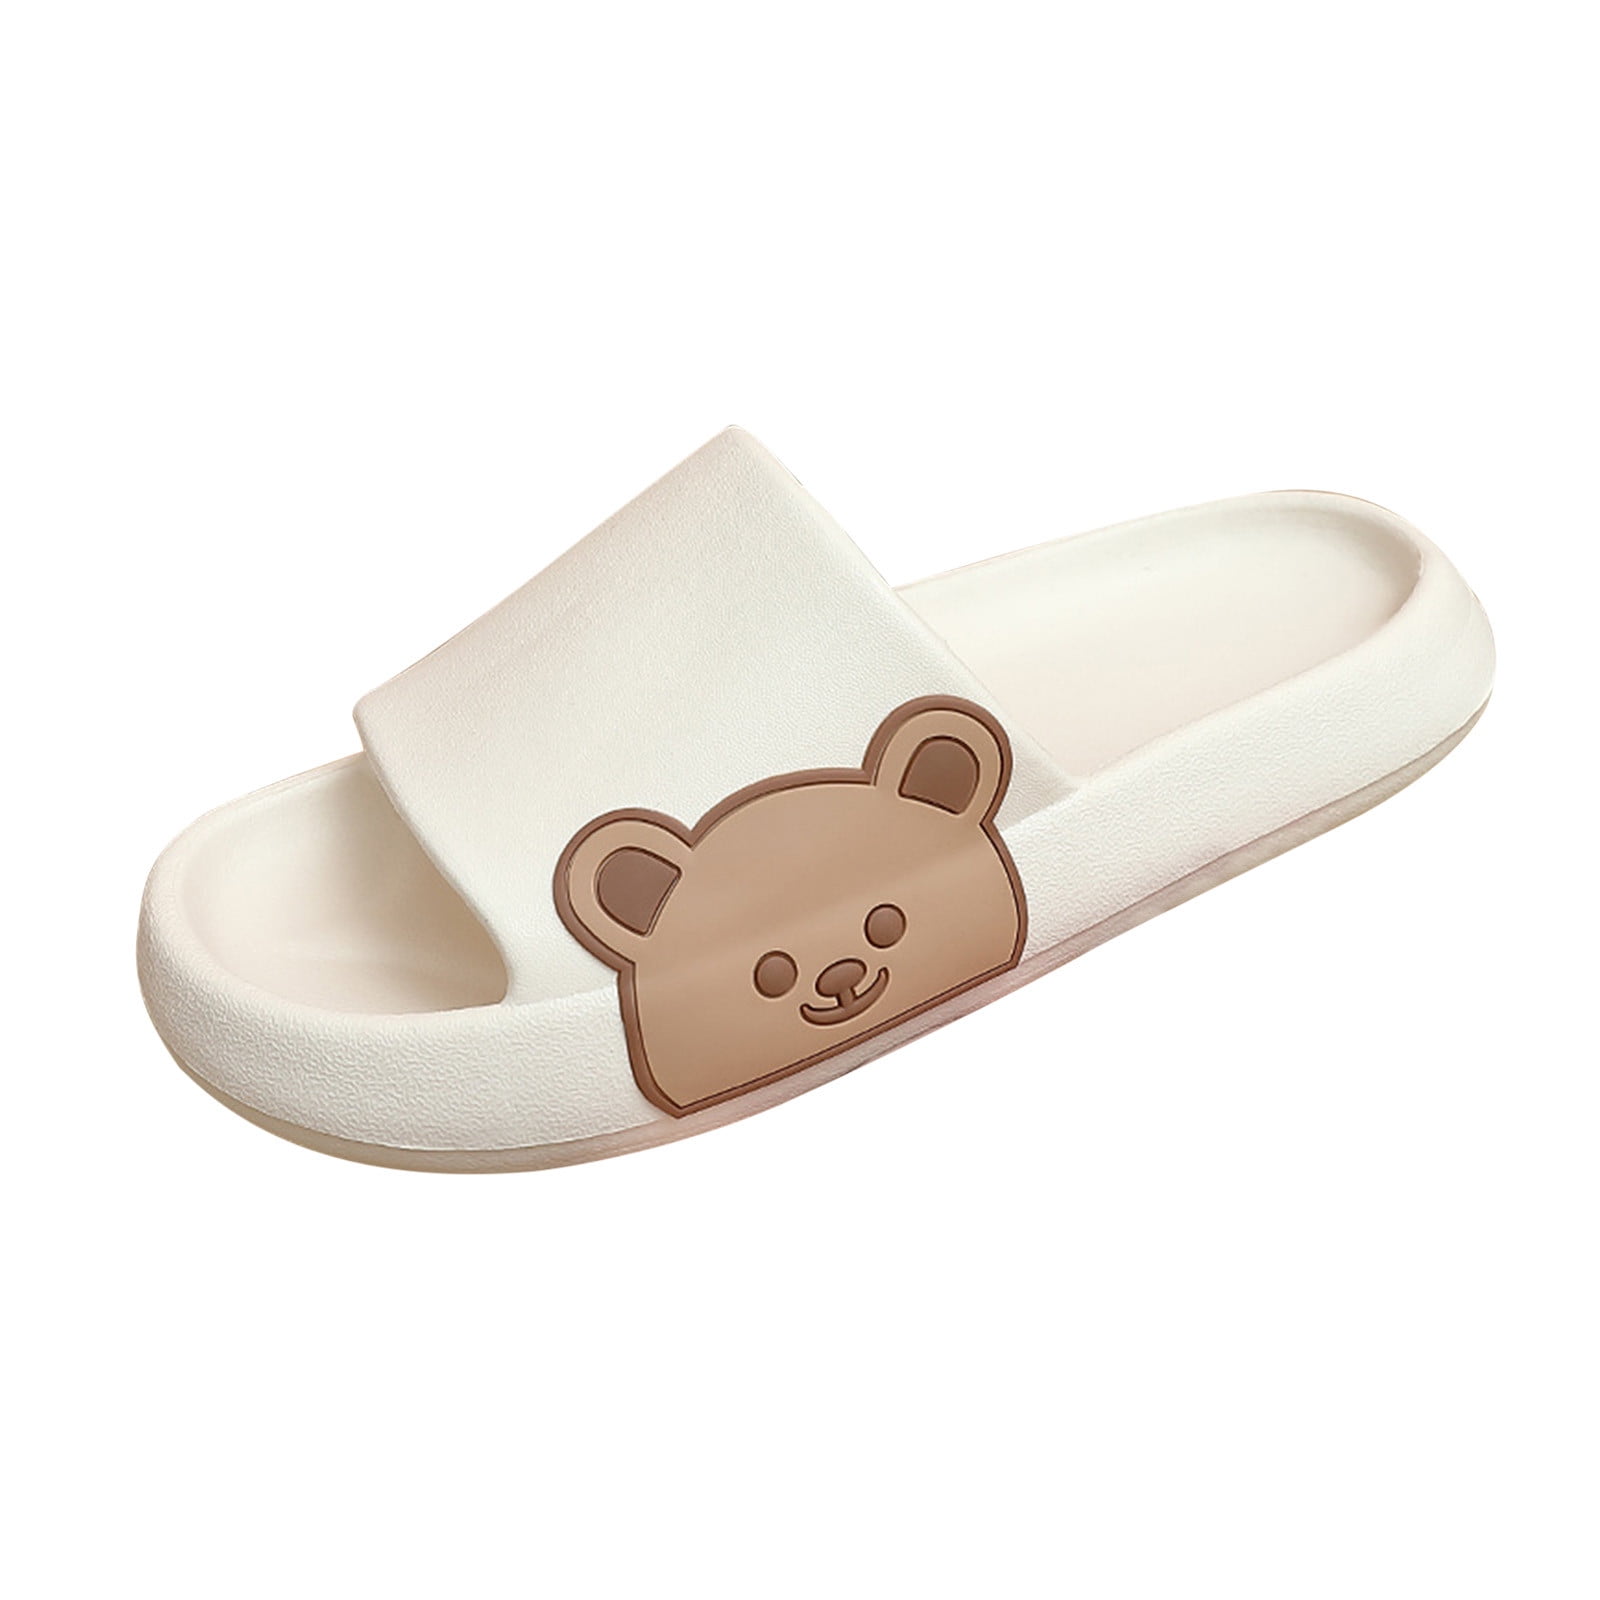 2023 cute brand new brown teddy| Alibaba.com